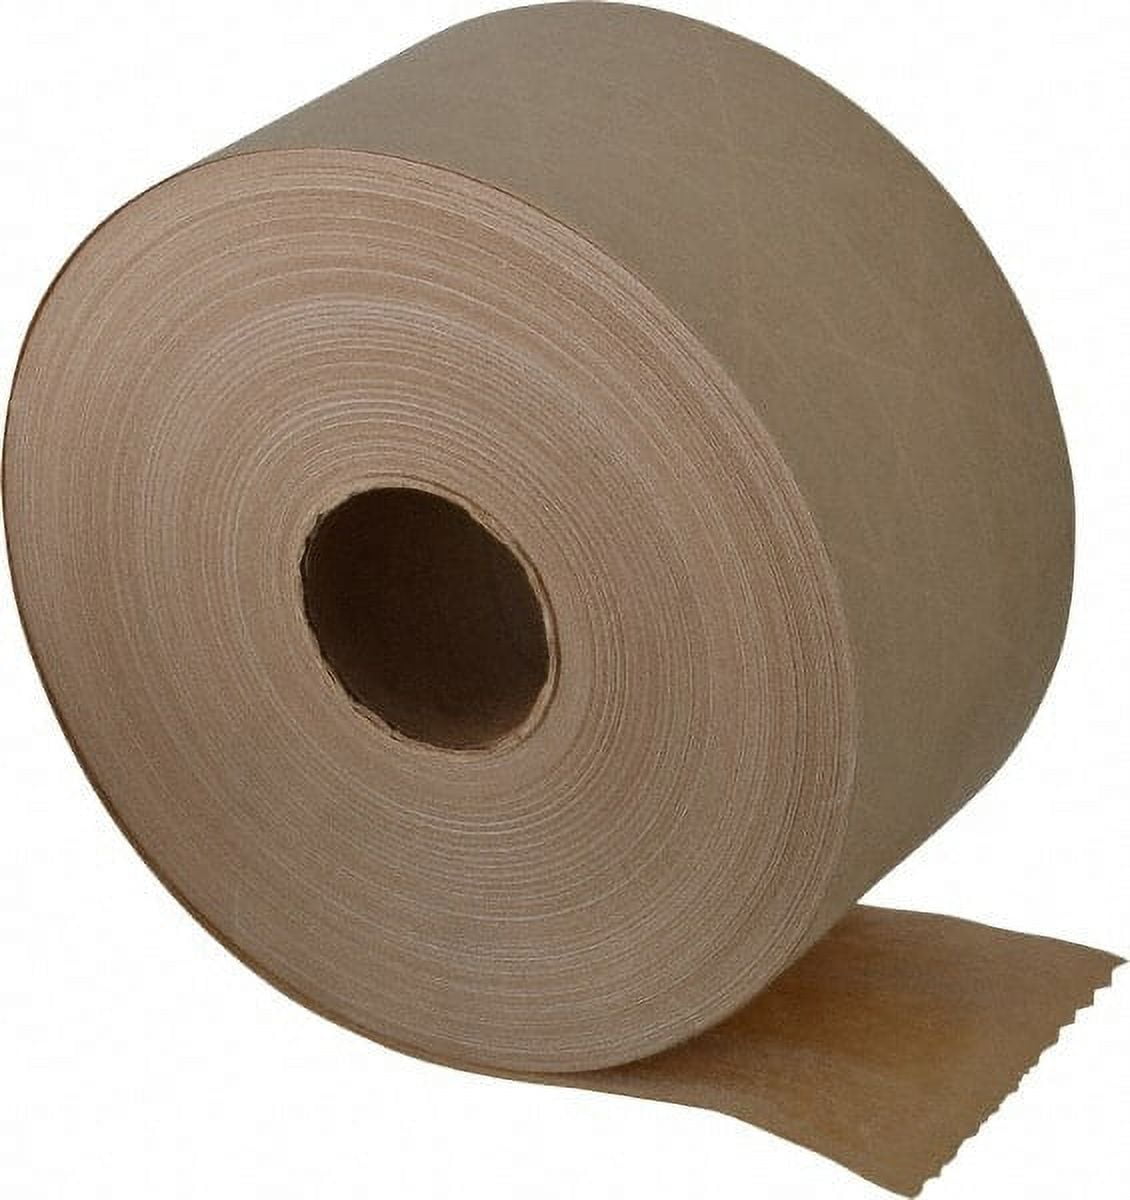 Manila Pattern Paper: Roll of 45 X 10 yards (Medium / Standard, Weight 125)